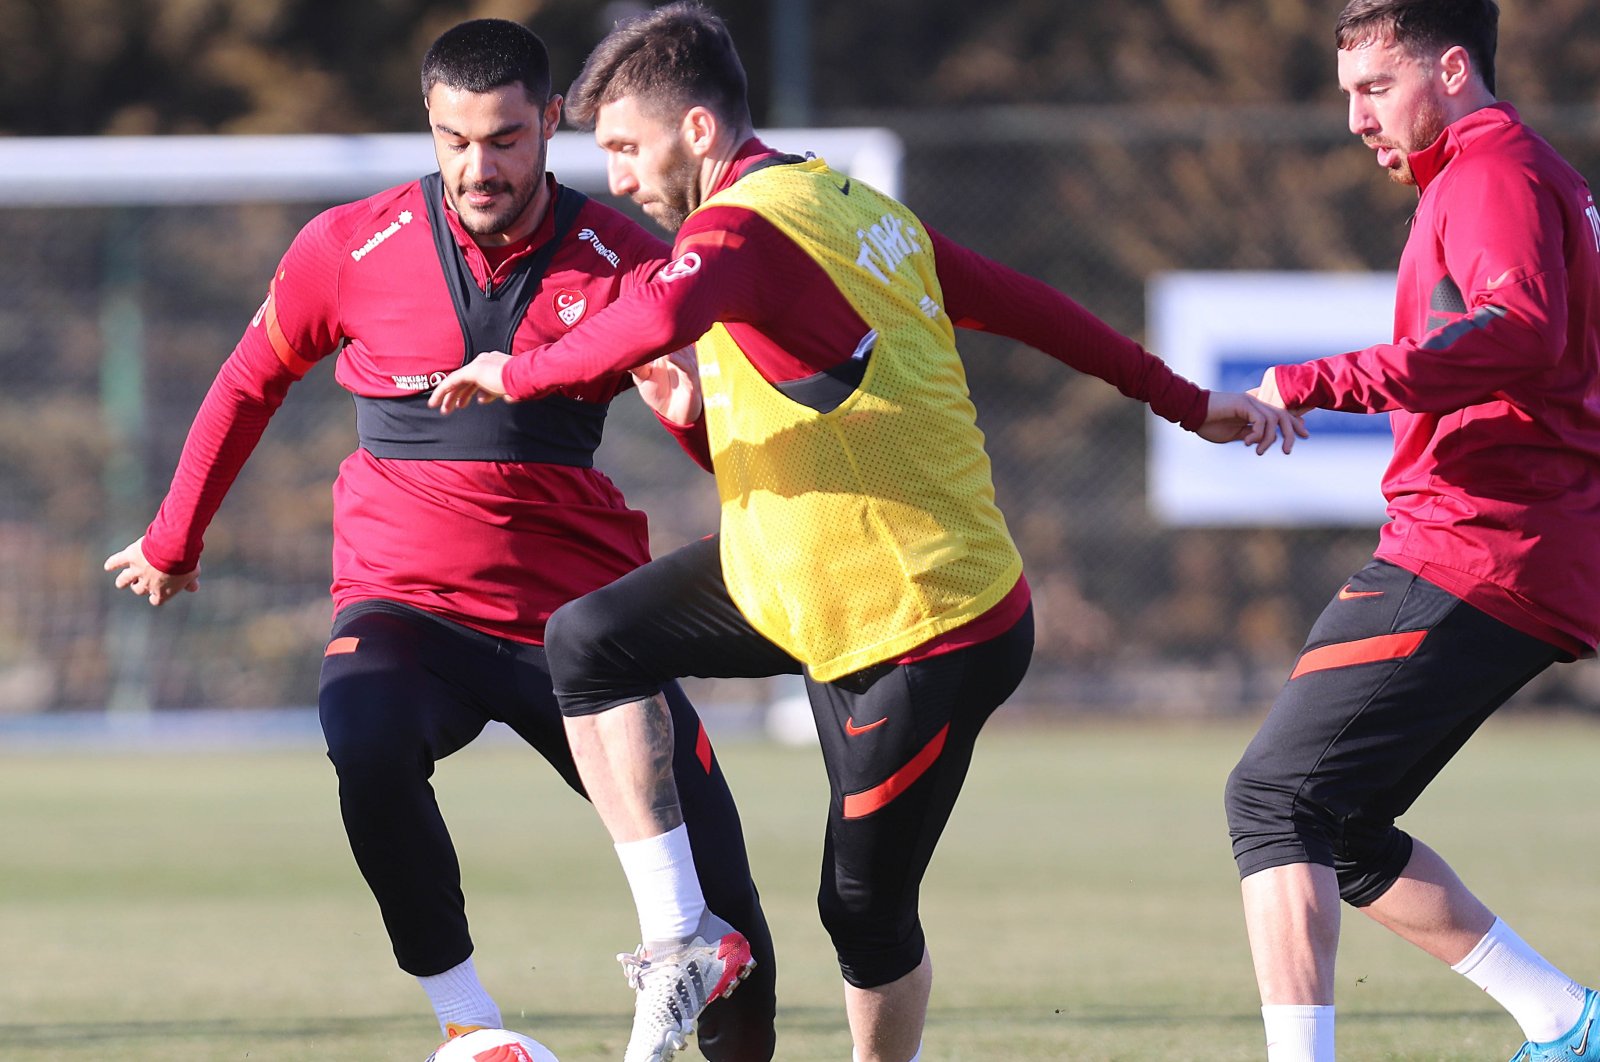 Turkey national team footballers train before their match against Italy, Konya, Turkey, March 27, 2022. 